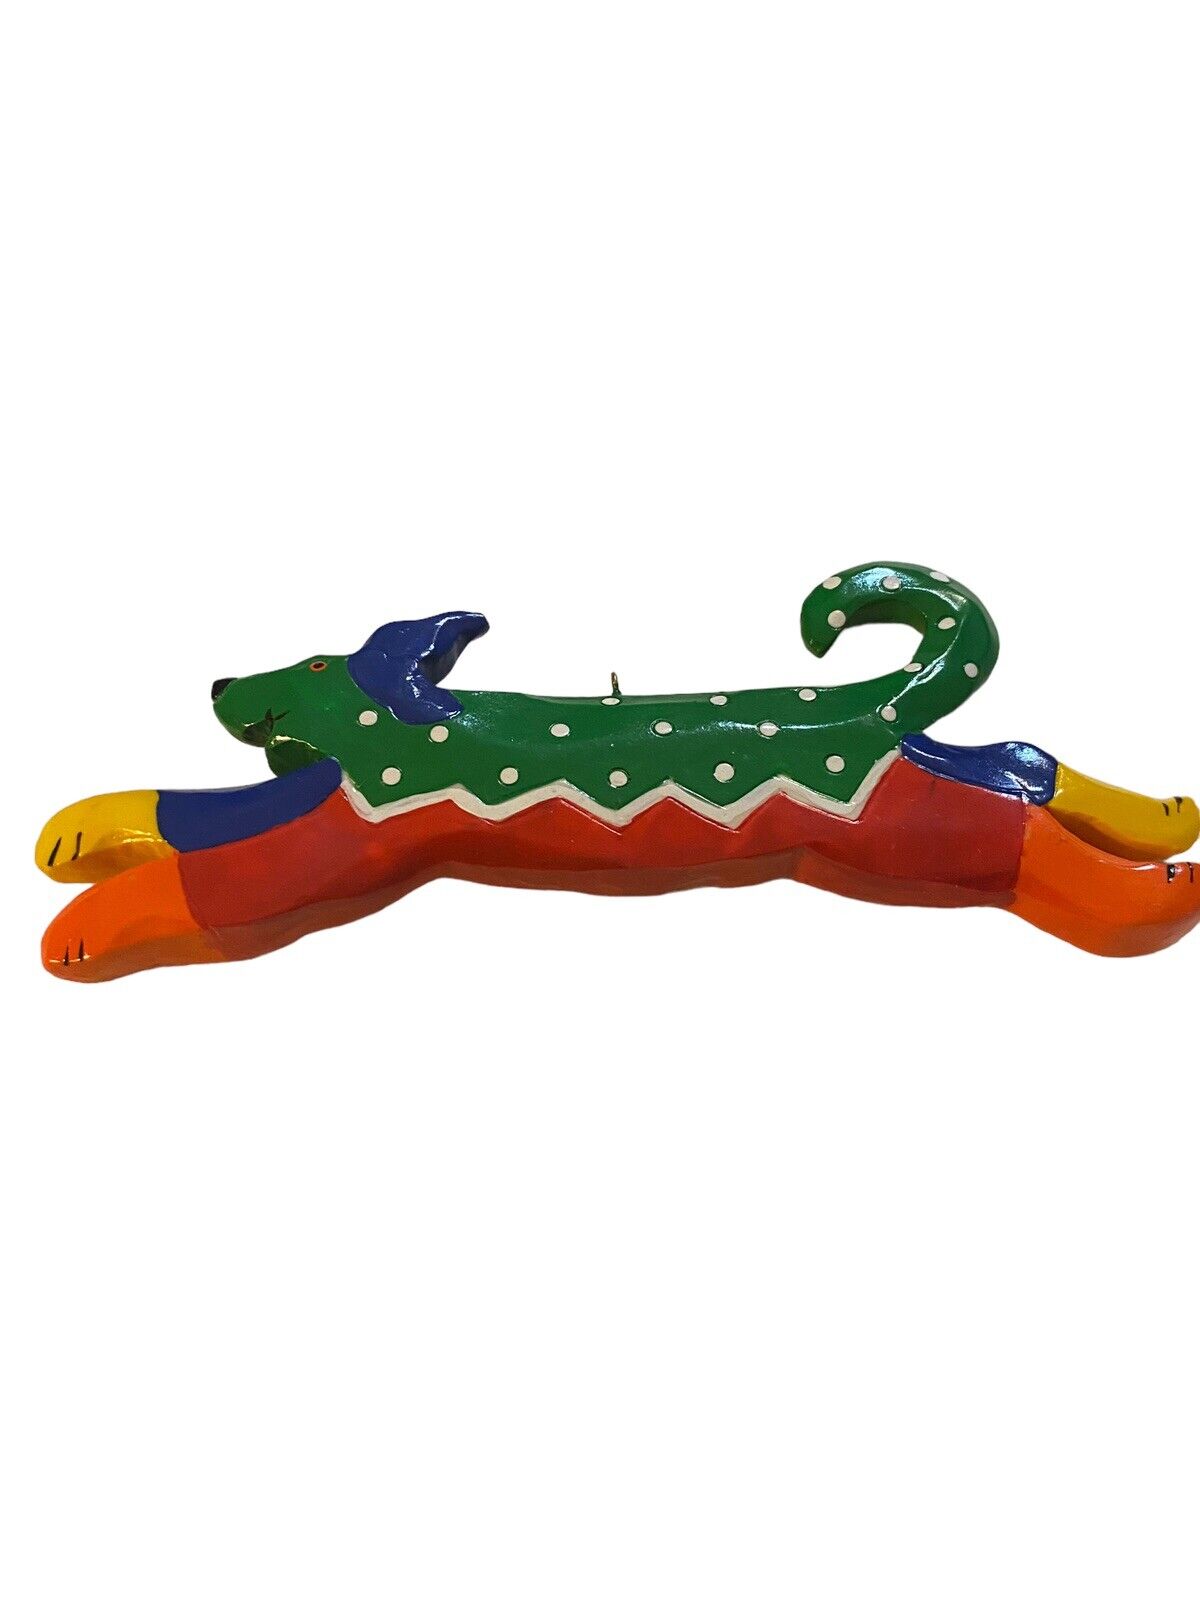 Primitive Whimsical Colorful Folk Art Painted Dog Wood Christmas Ornament 5 1/2”